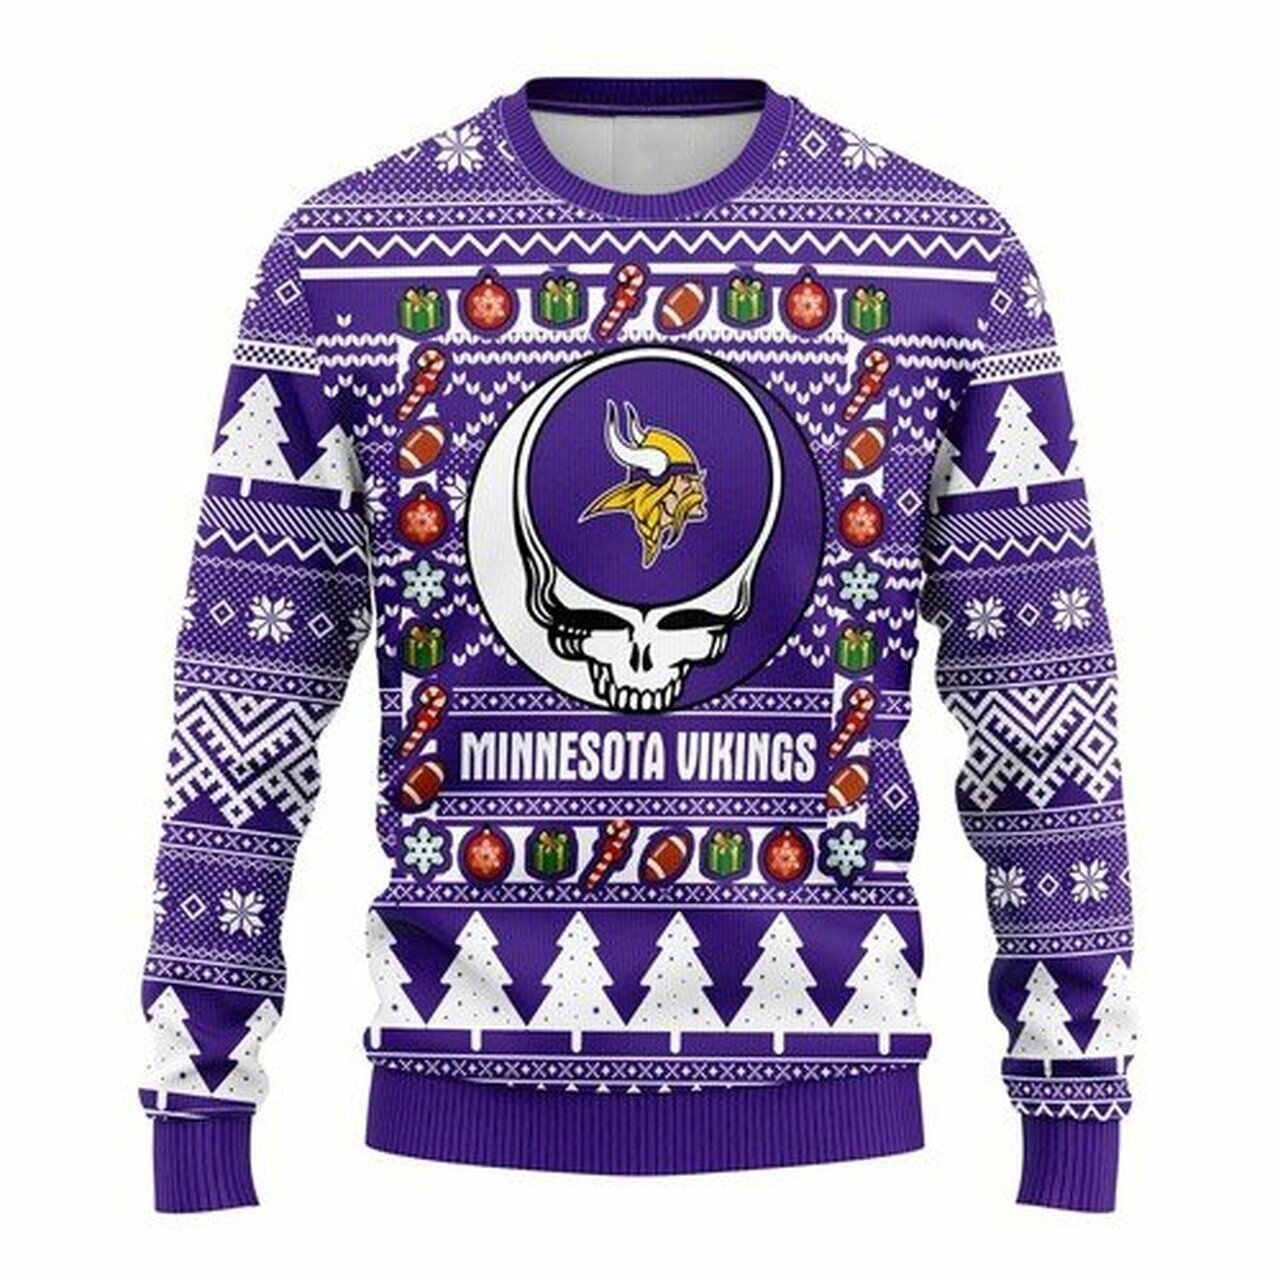 NFL Minnesota Vikings Grateful Dead ugly christmas sweater